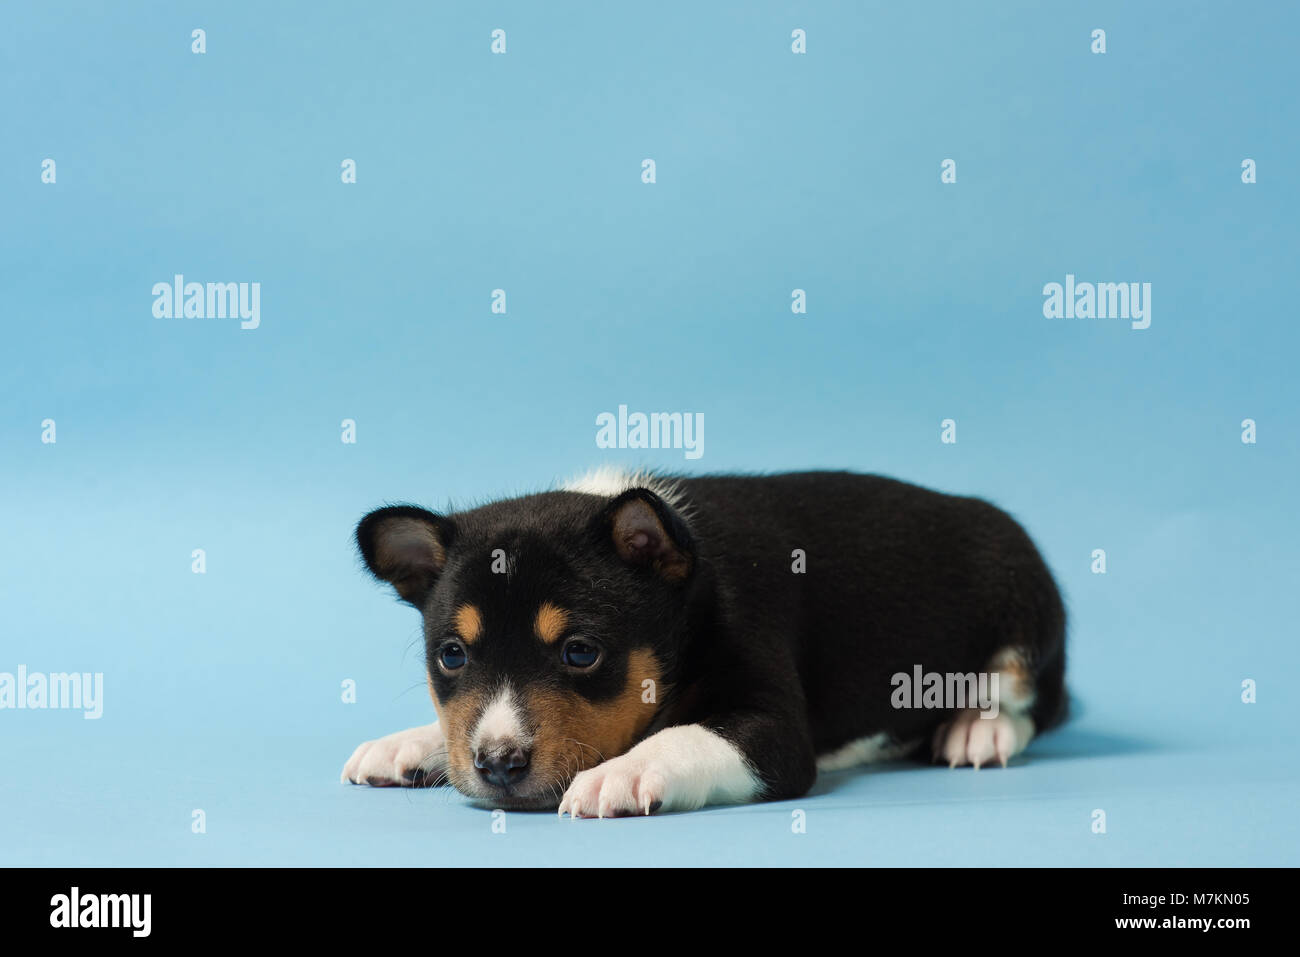 Studio photo of little dog at isolated blue background. Stock Photo